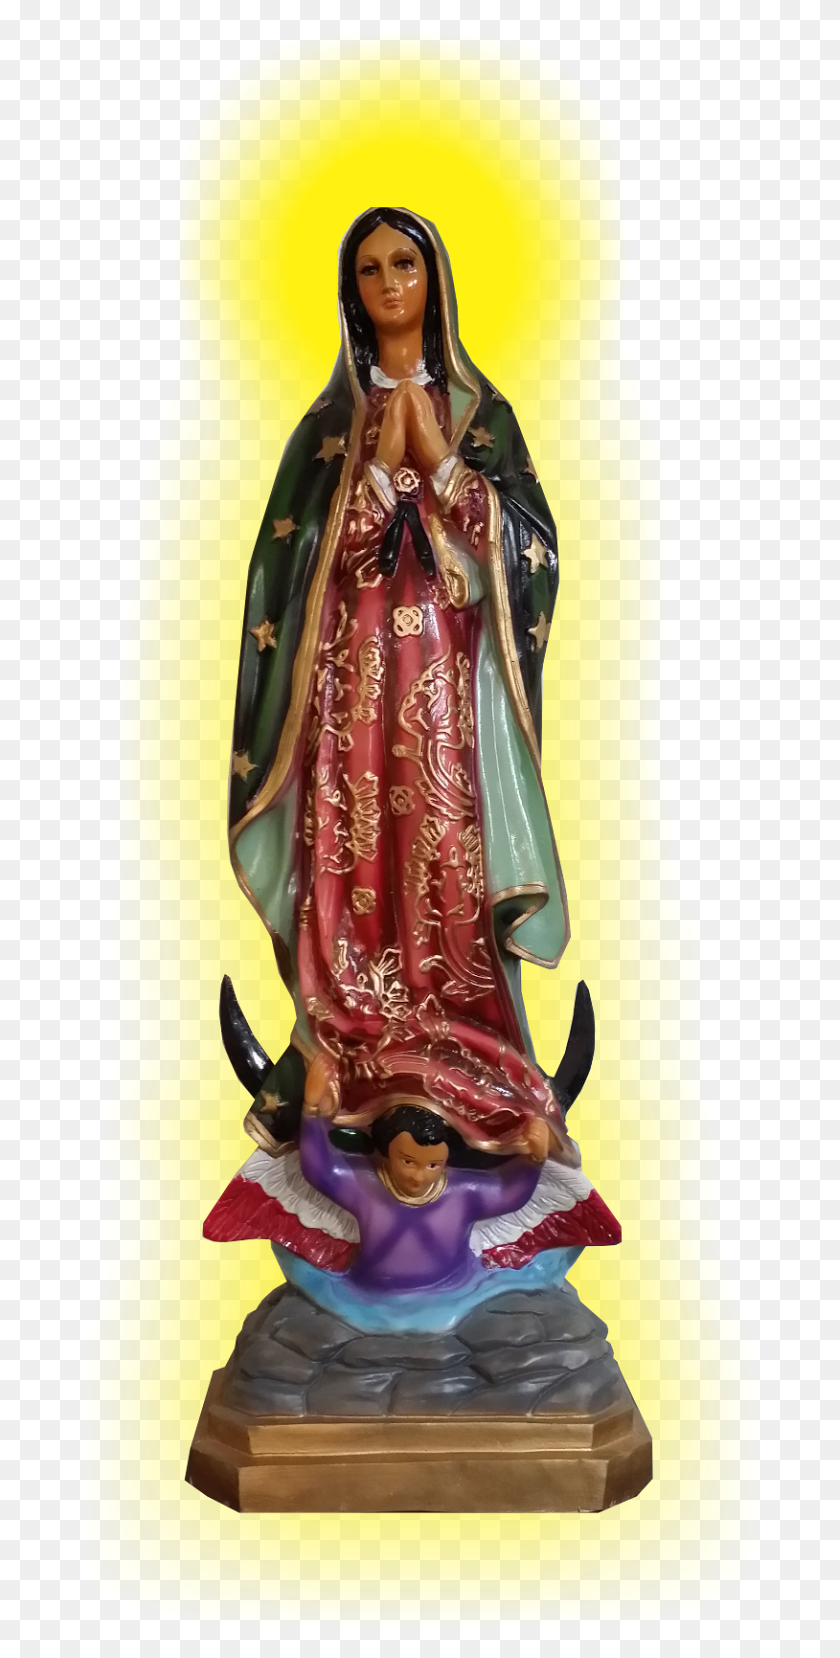 683x1598 Oracin De La Virgen De Guadalupe Figurine, Clothing, Apparel, Sweets Hd Png